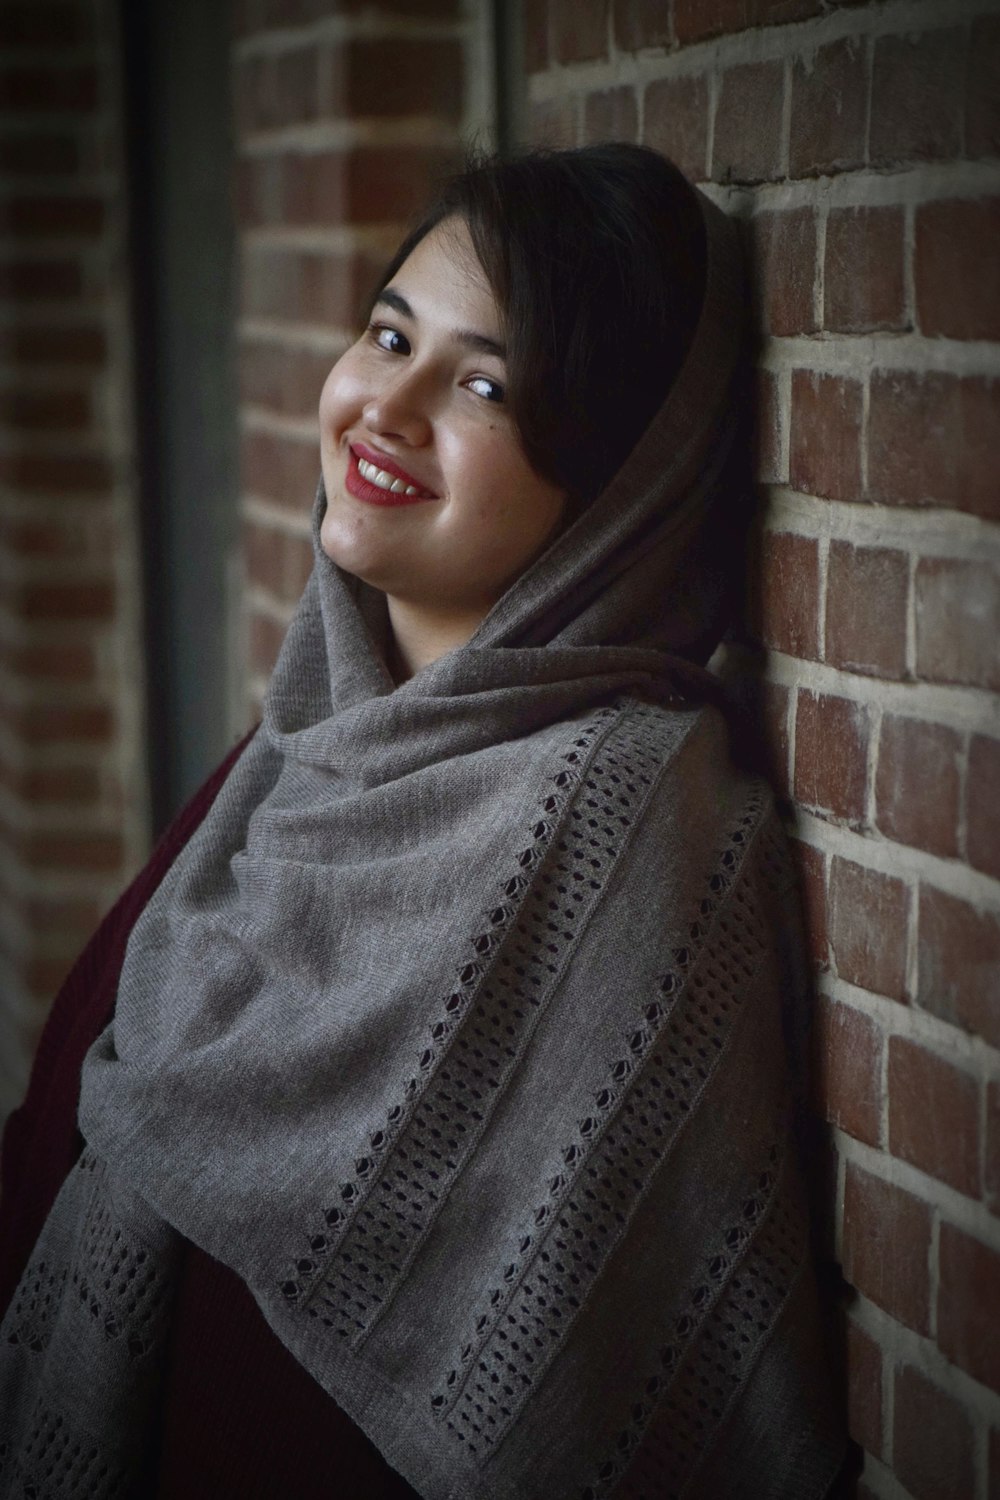 a woman wearing a shawl standing next to a brick wall